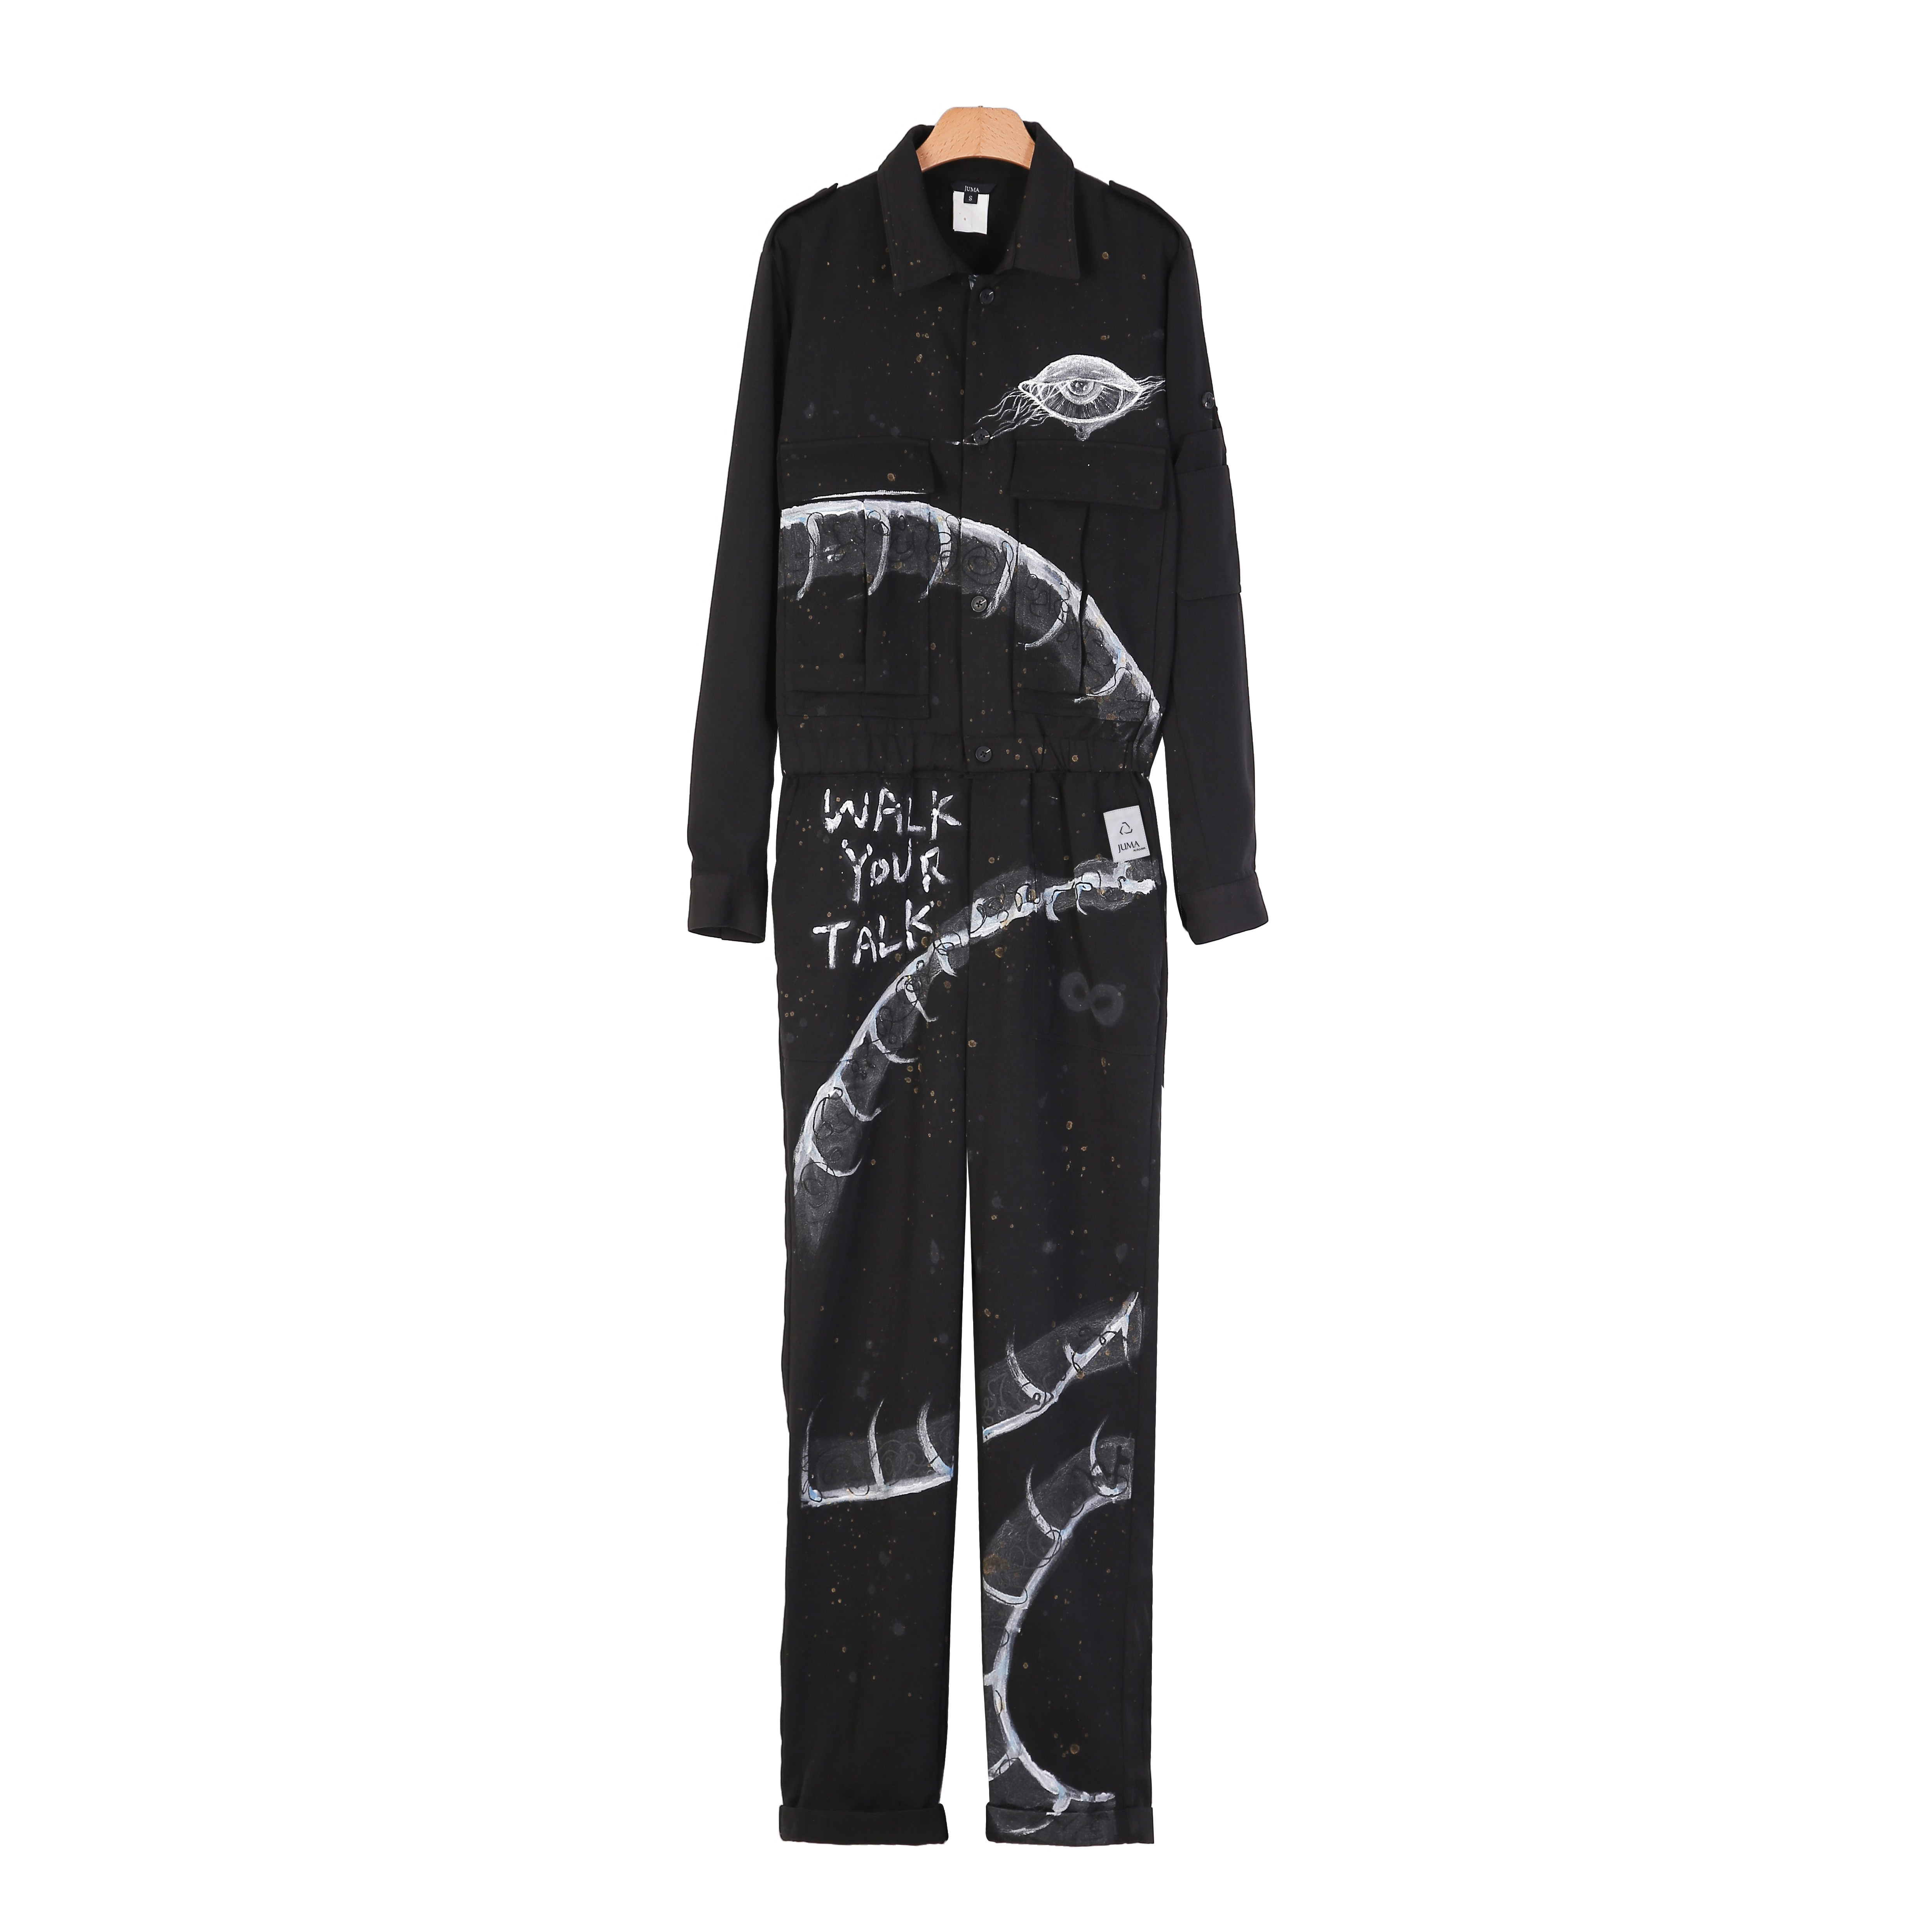 Shuhs 连衣裙 - 15 个回收水瓶 - 黑白色｜Shuhs Printed Dress - 15 Recycled Water Bottles - Black & White